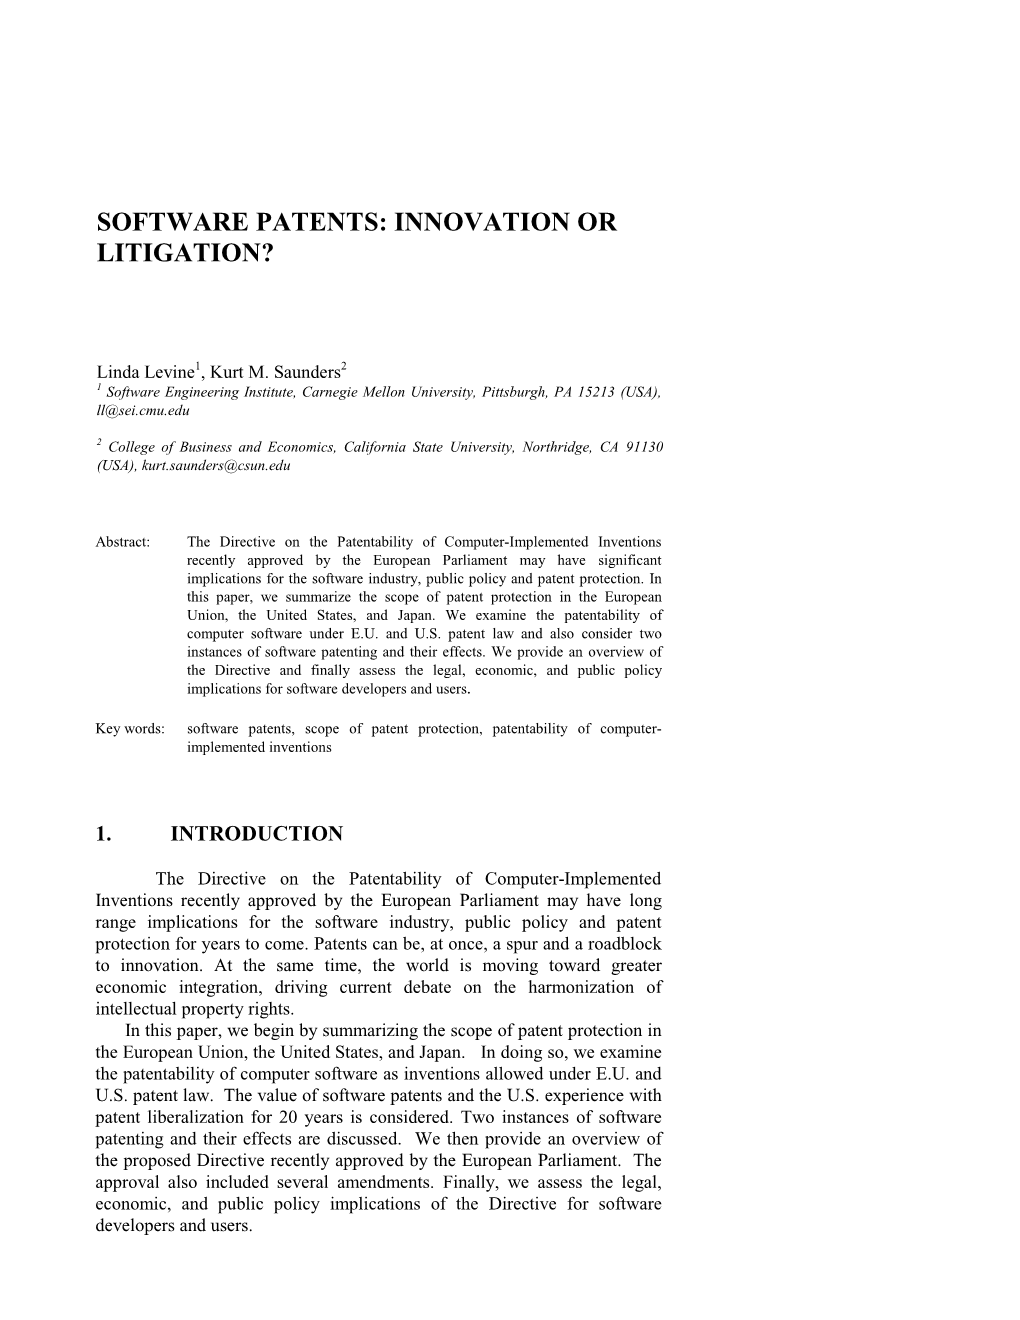 Software Patents: Innovation Or Litigation?